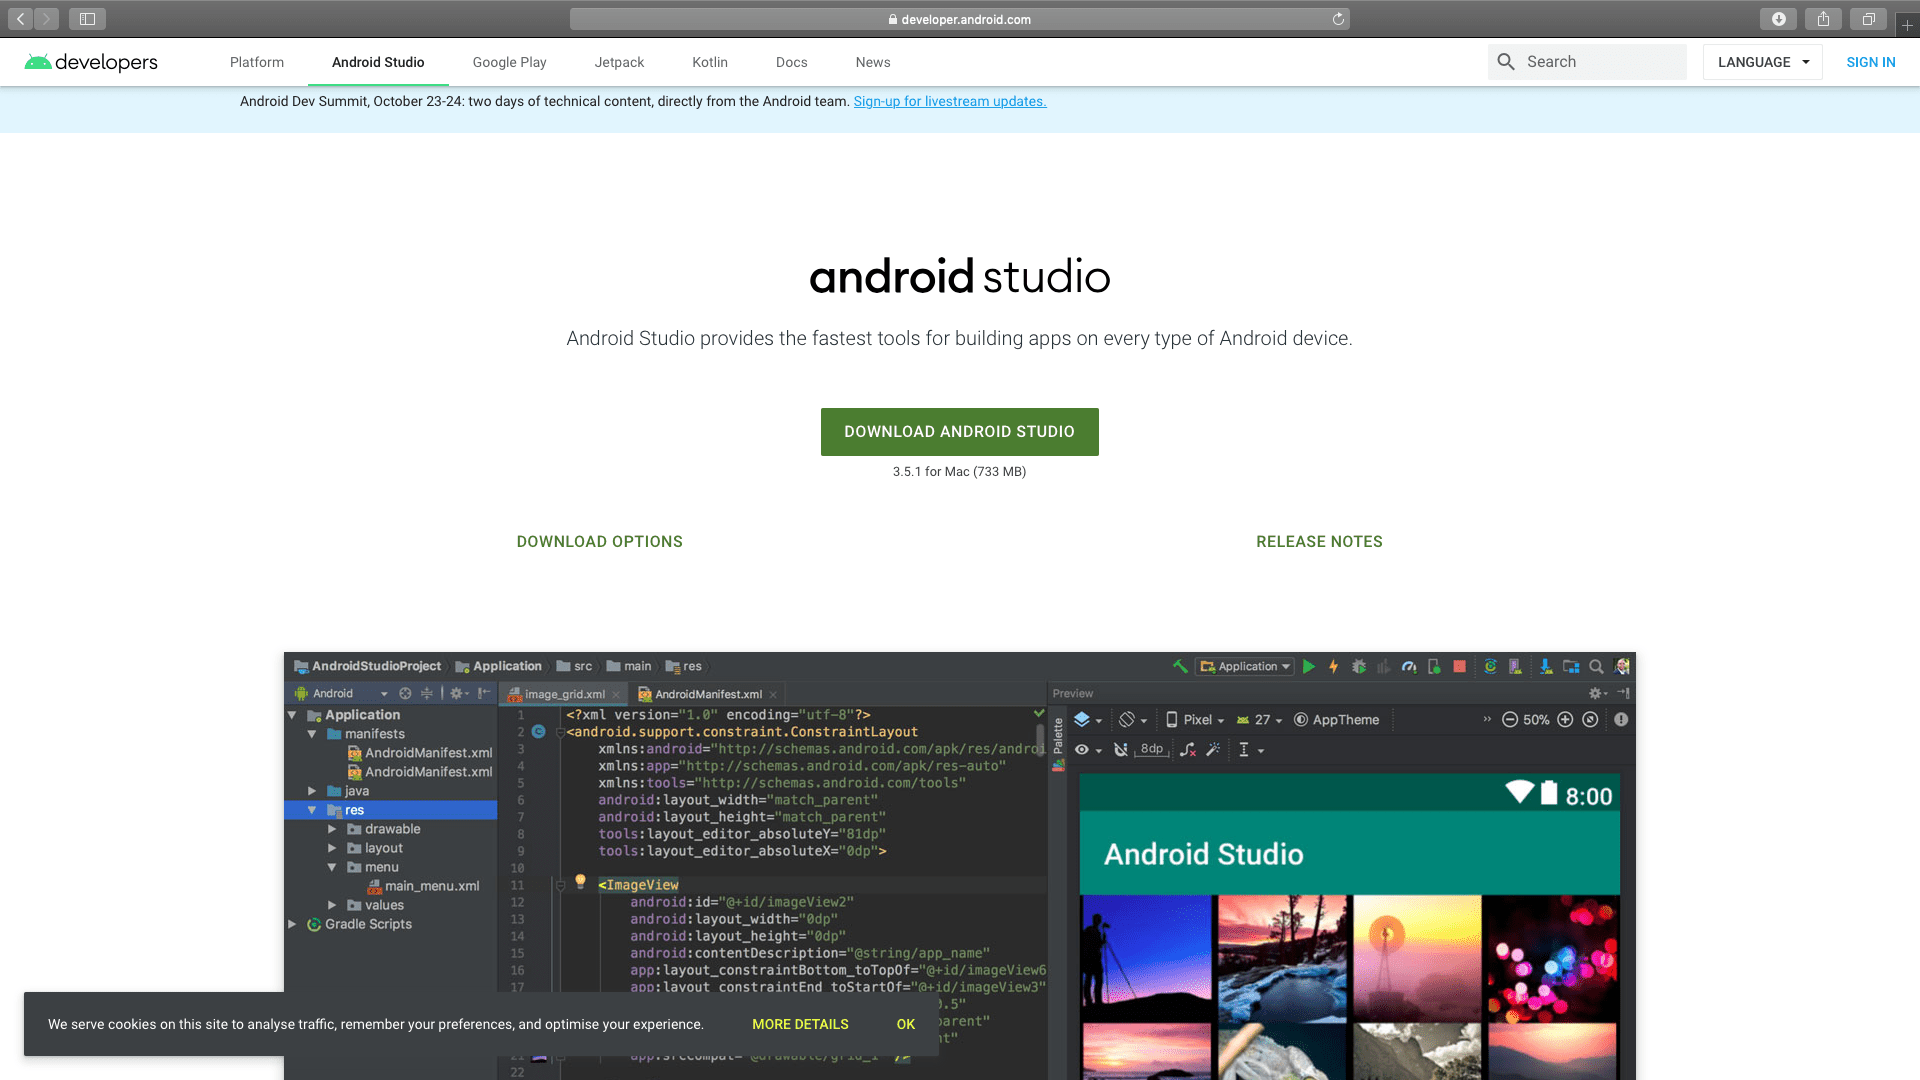 android studio emulator on the mac